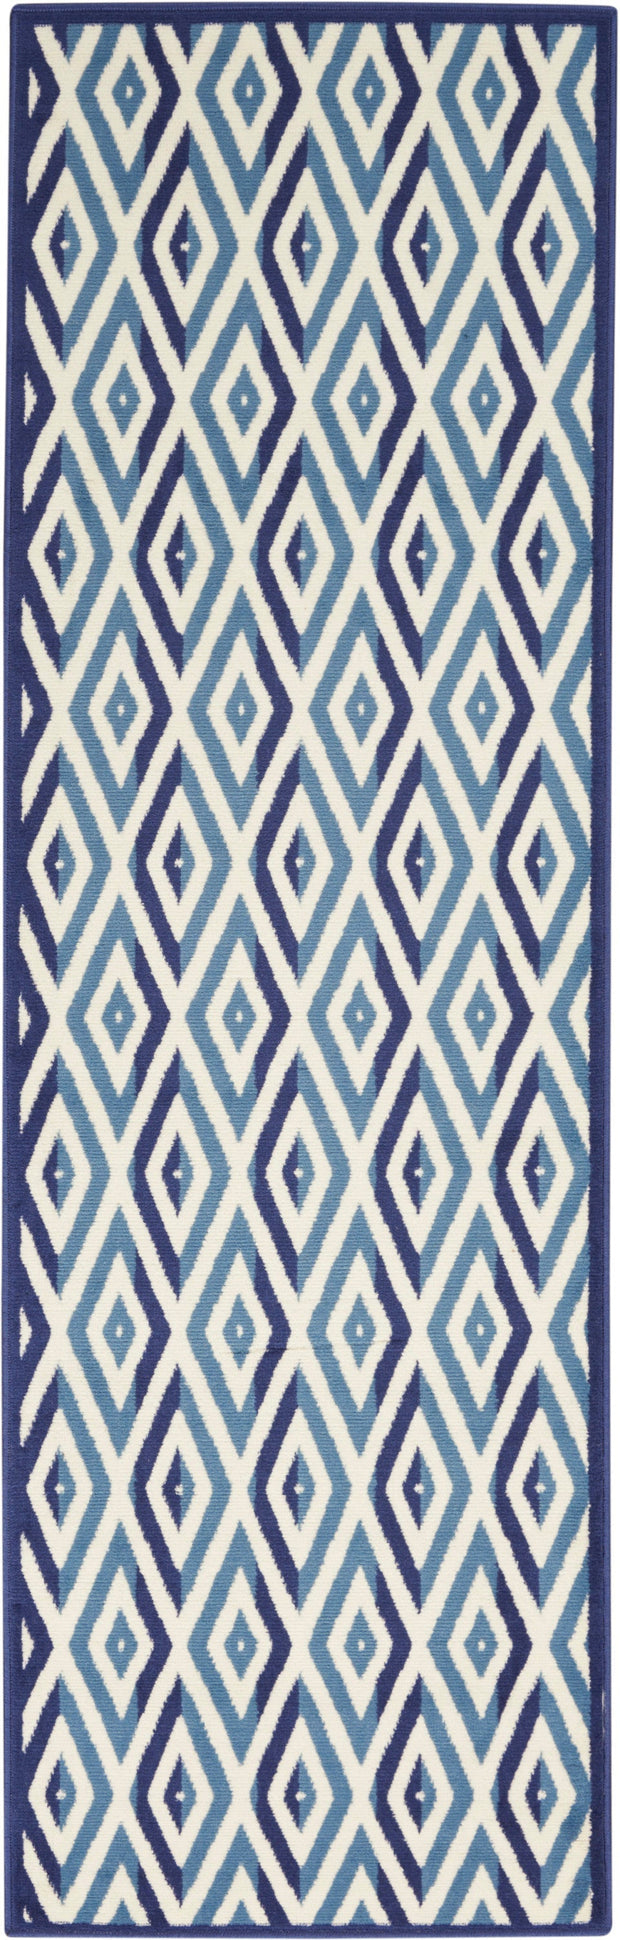 grafix white blue rug by nourison 99446411808 redo 3